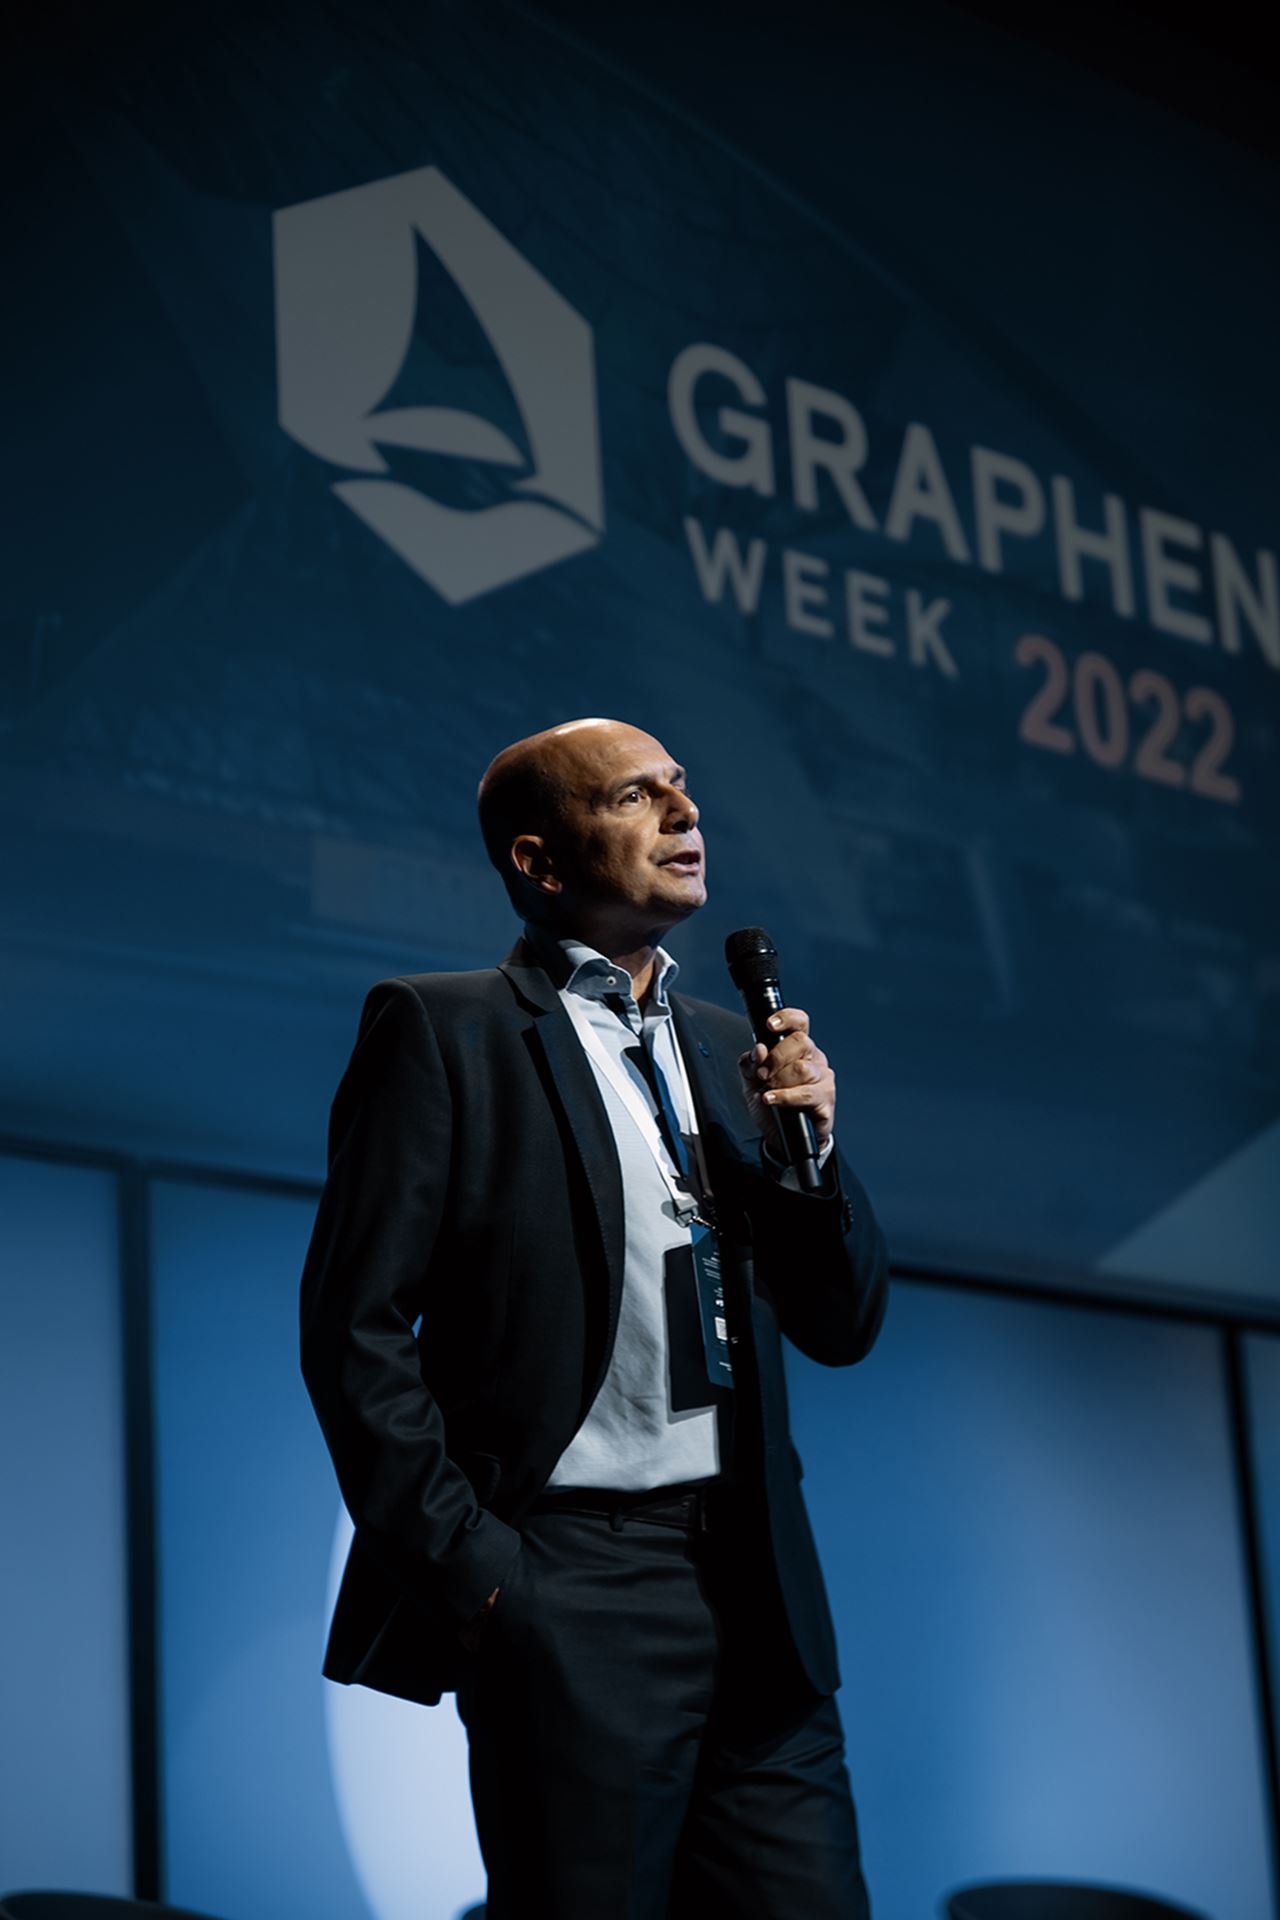 Vincenzo Palermo invited speaker at Graphene Week 2023